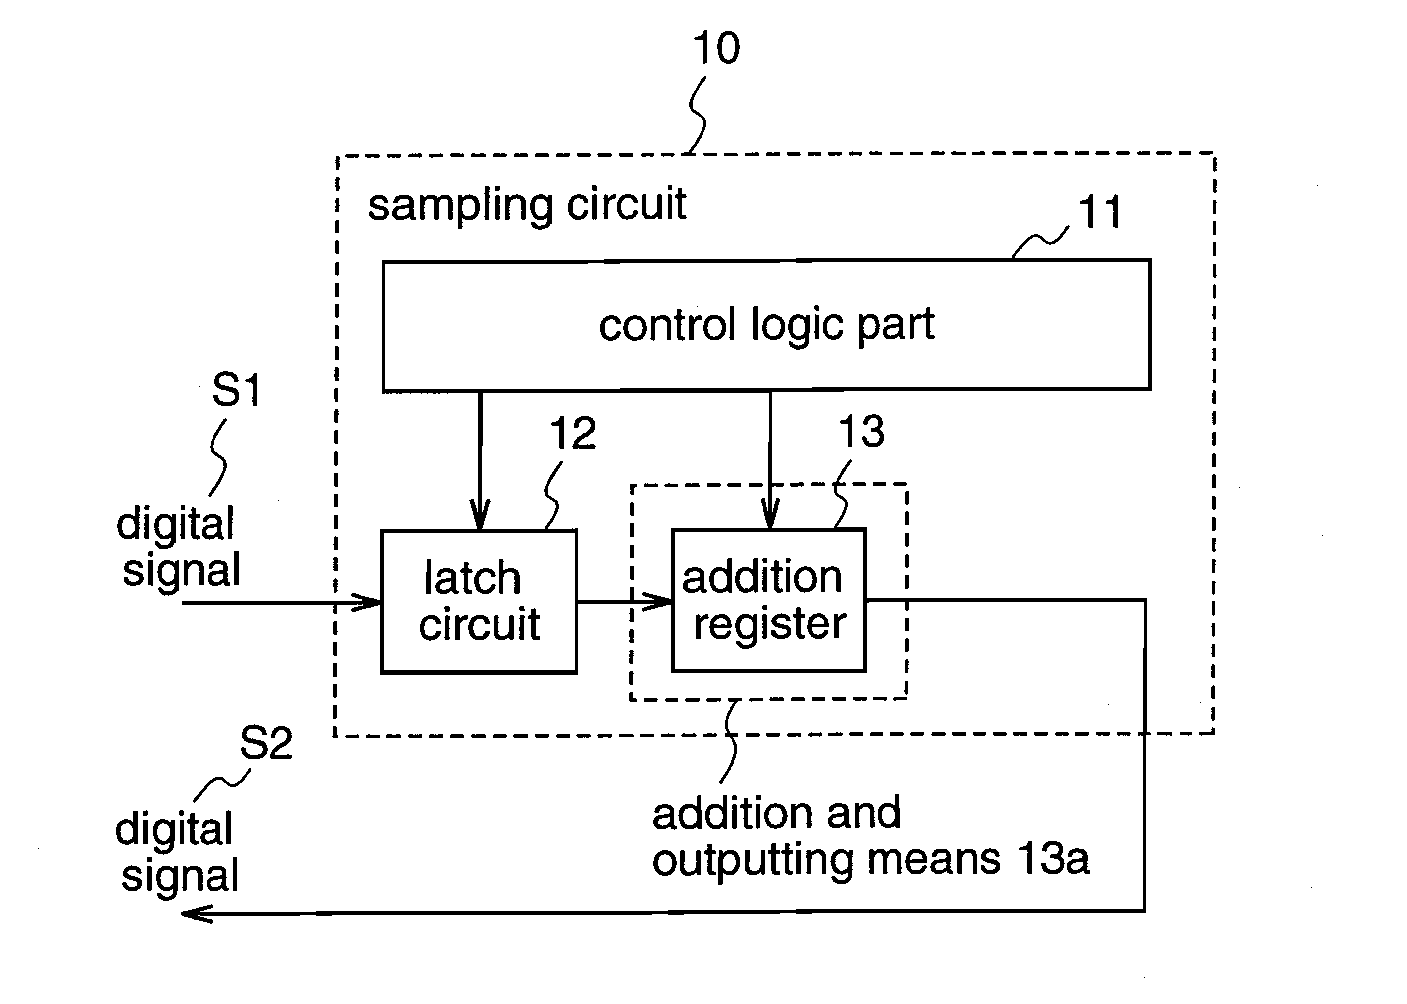 Sampling circuit